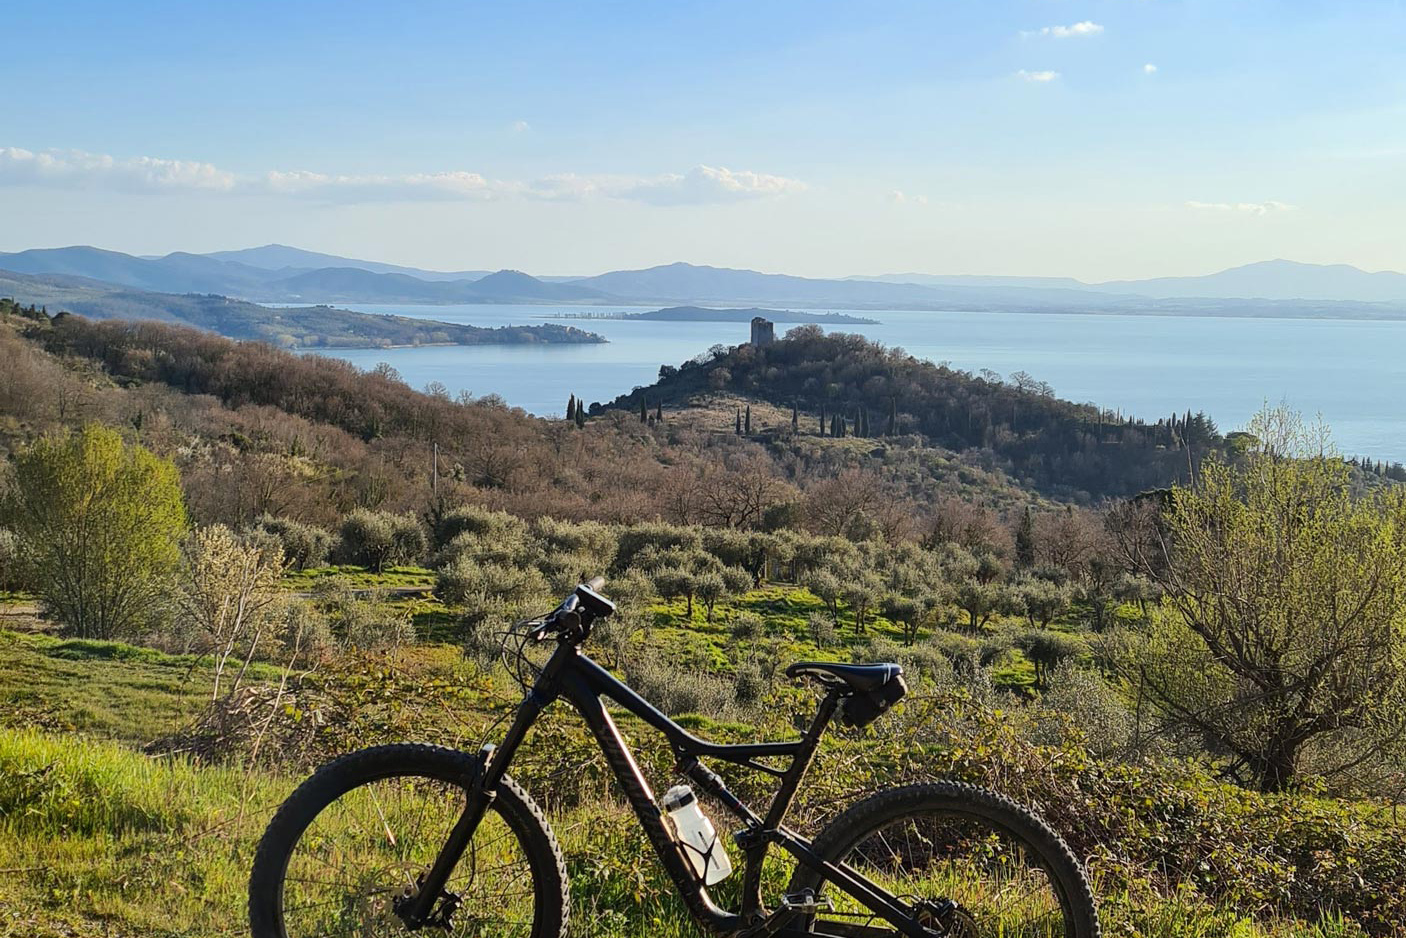 Bikes, panoramas and photos